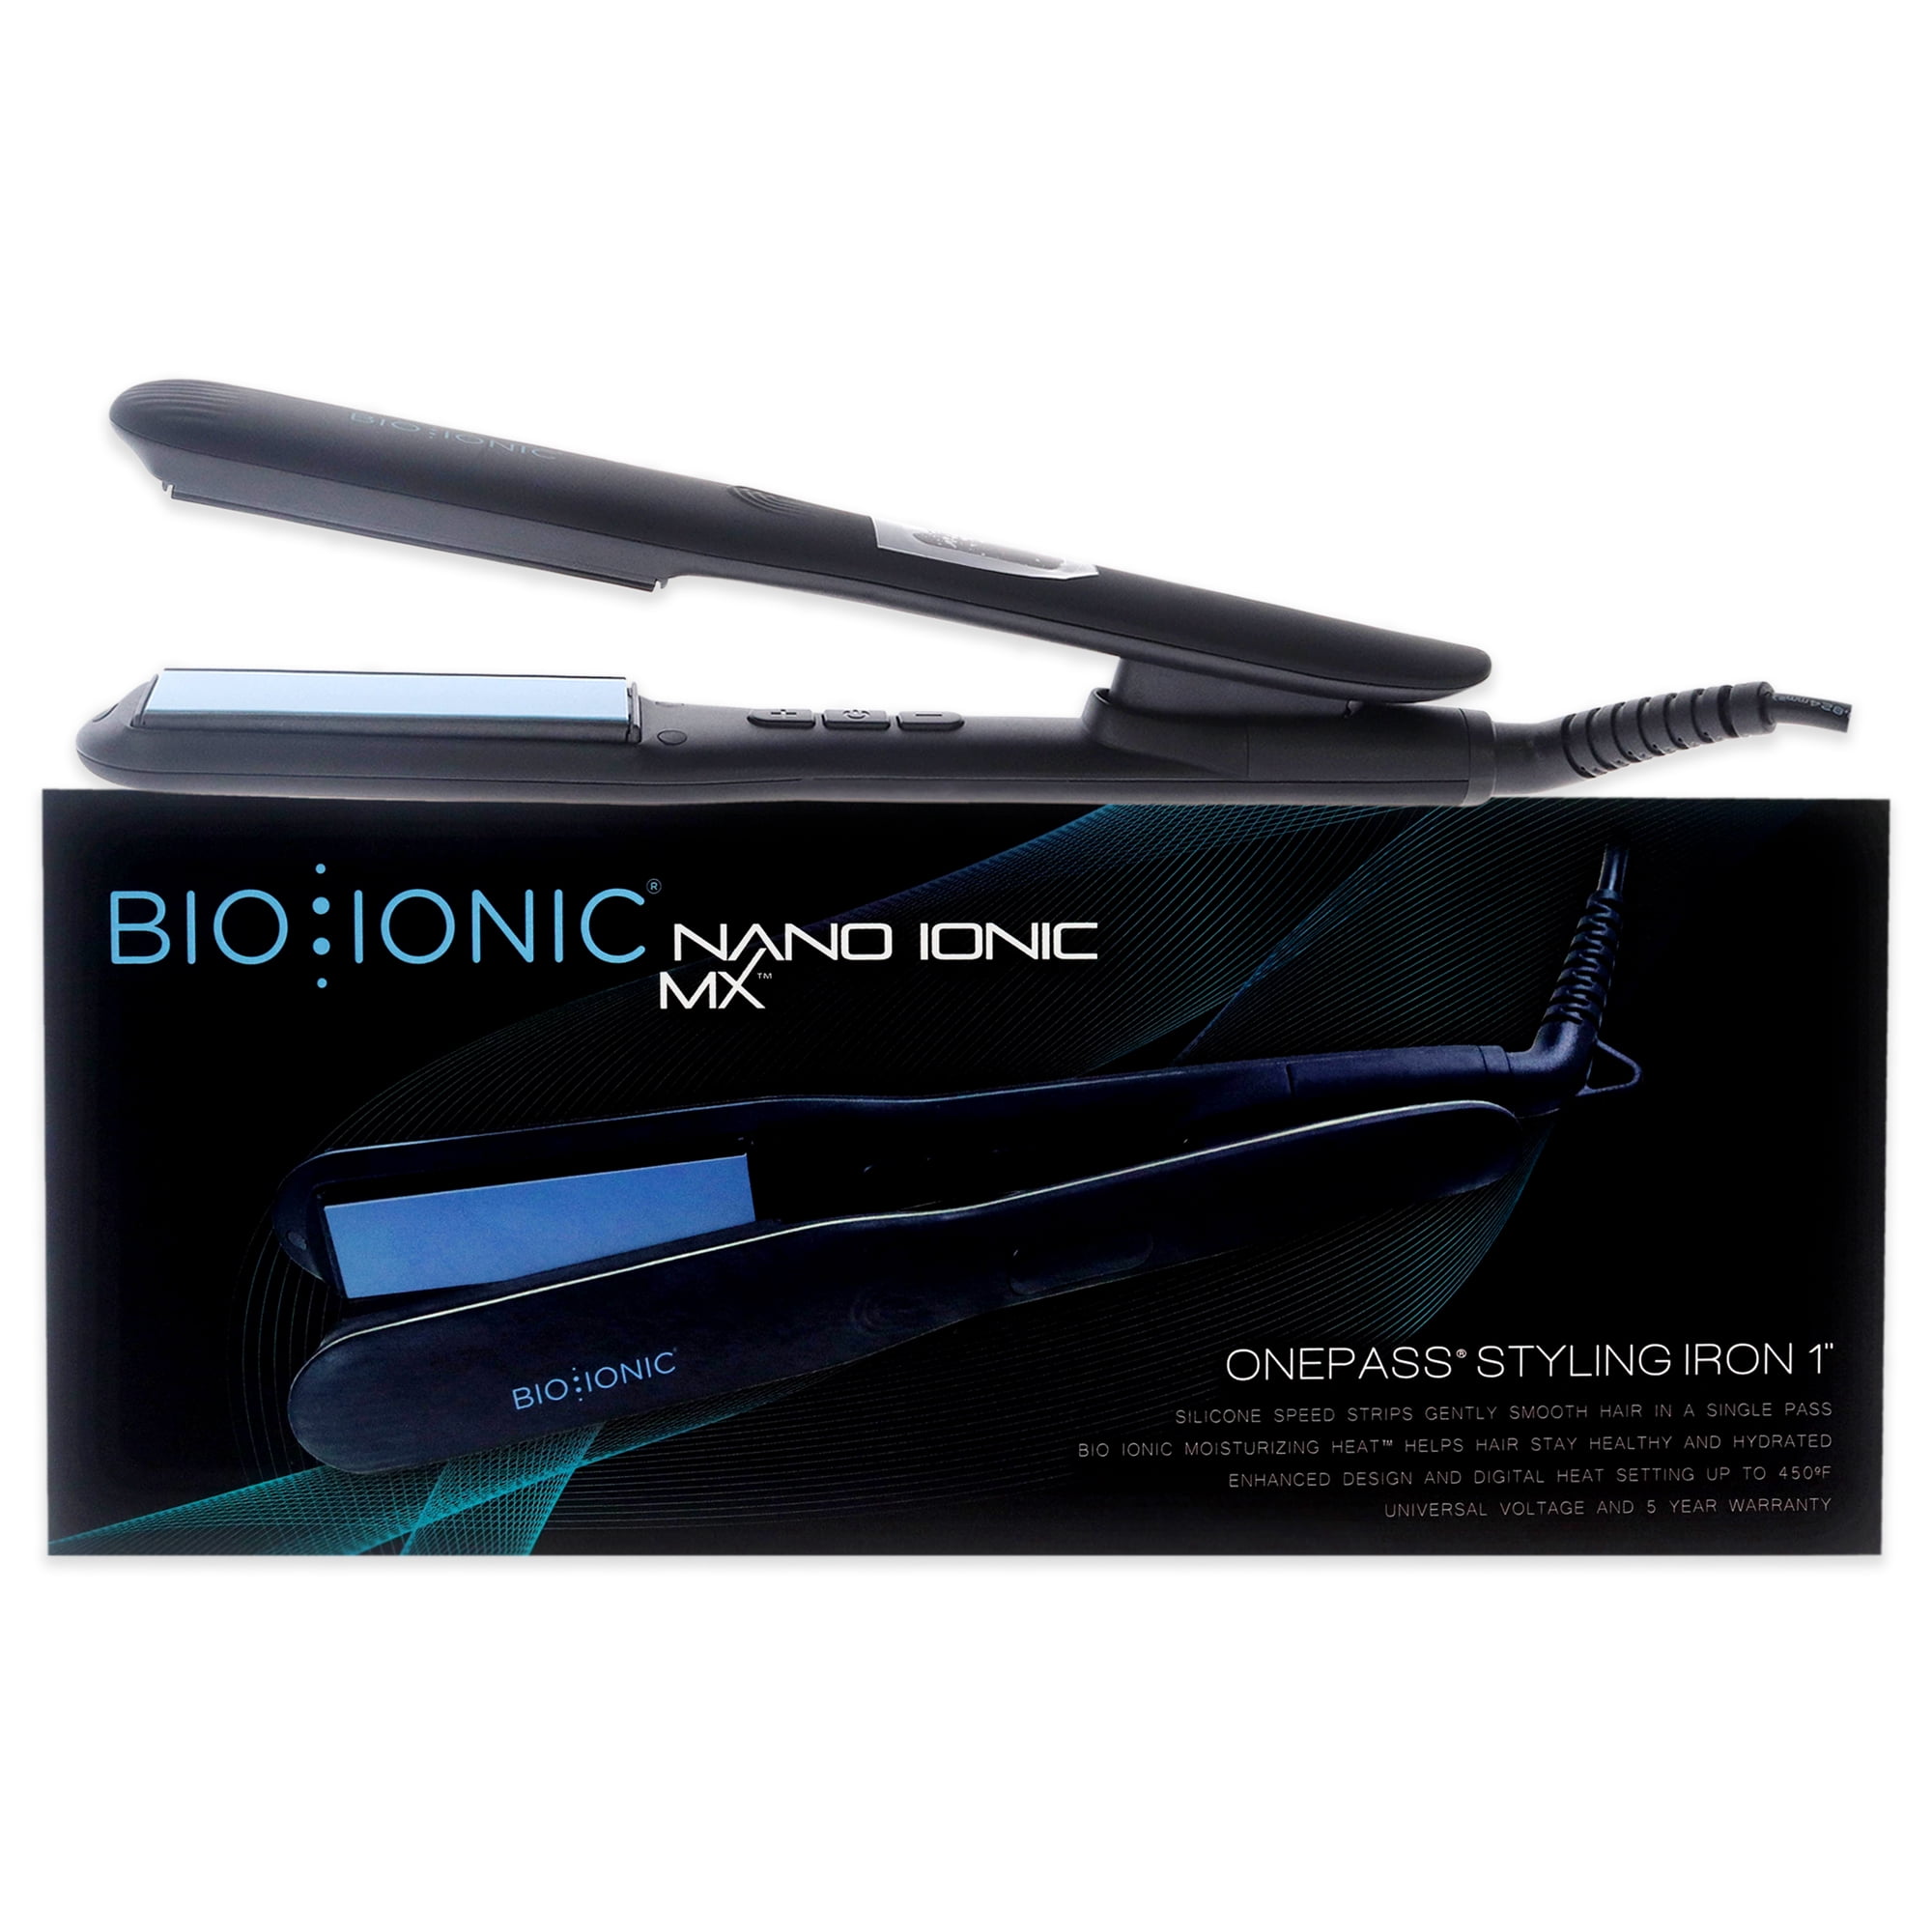 Bio ionic plancha alisadora plancha de peinado onepass nanoionic mx - negro st-Op-1.0-Lm 1 inch bio ionic bio ionic plancha alisadora 1 inch